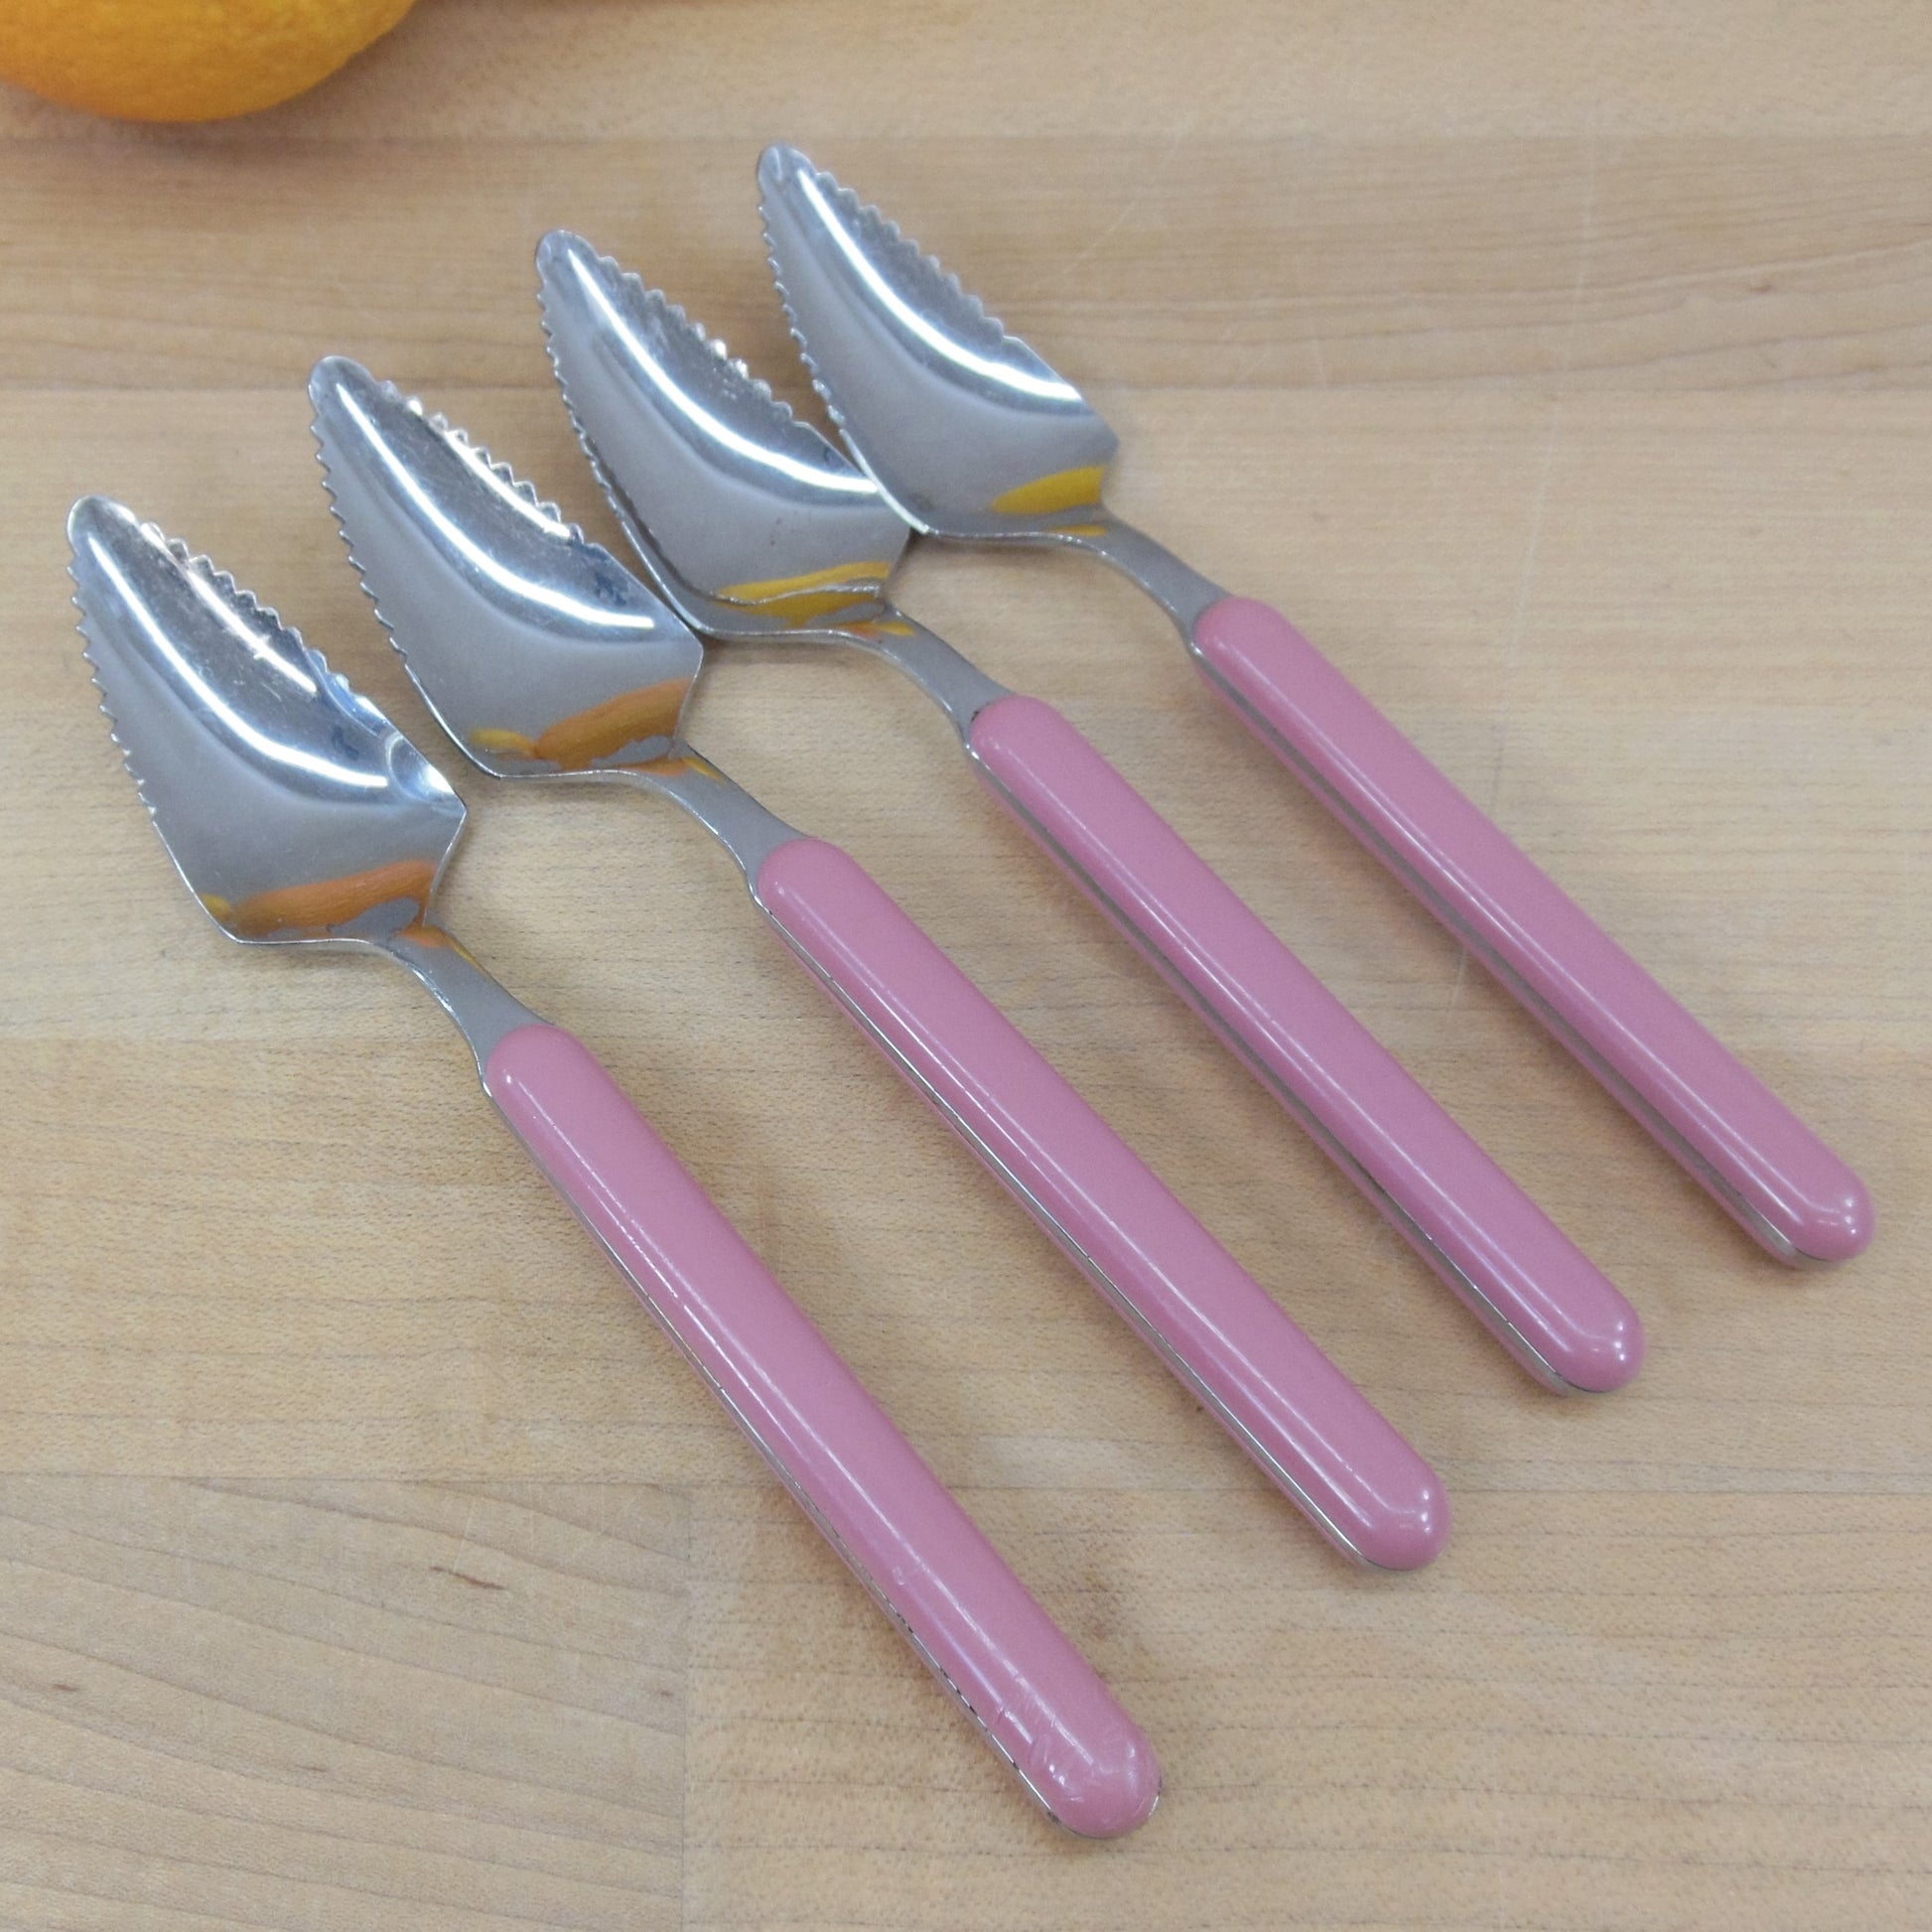 MIC Japan Linea Stainless Grapefruit Spoon Pink Handle - 4 Set Vintage